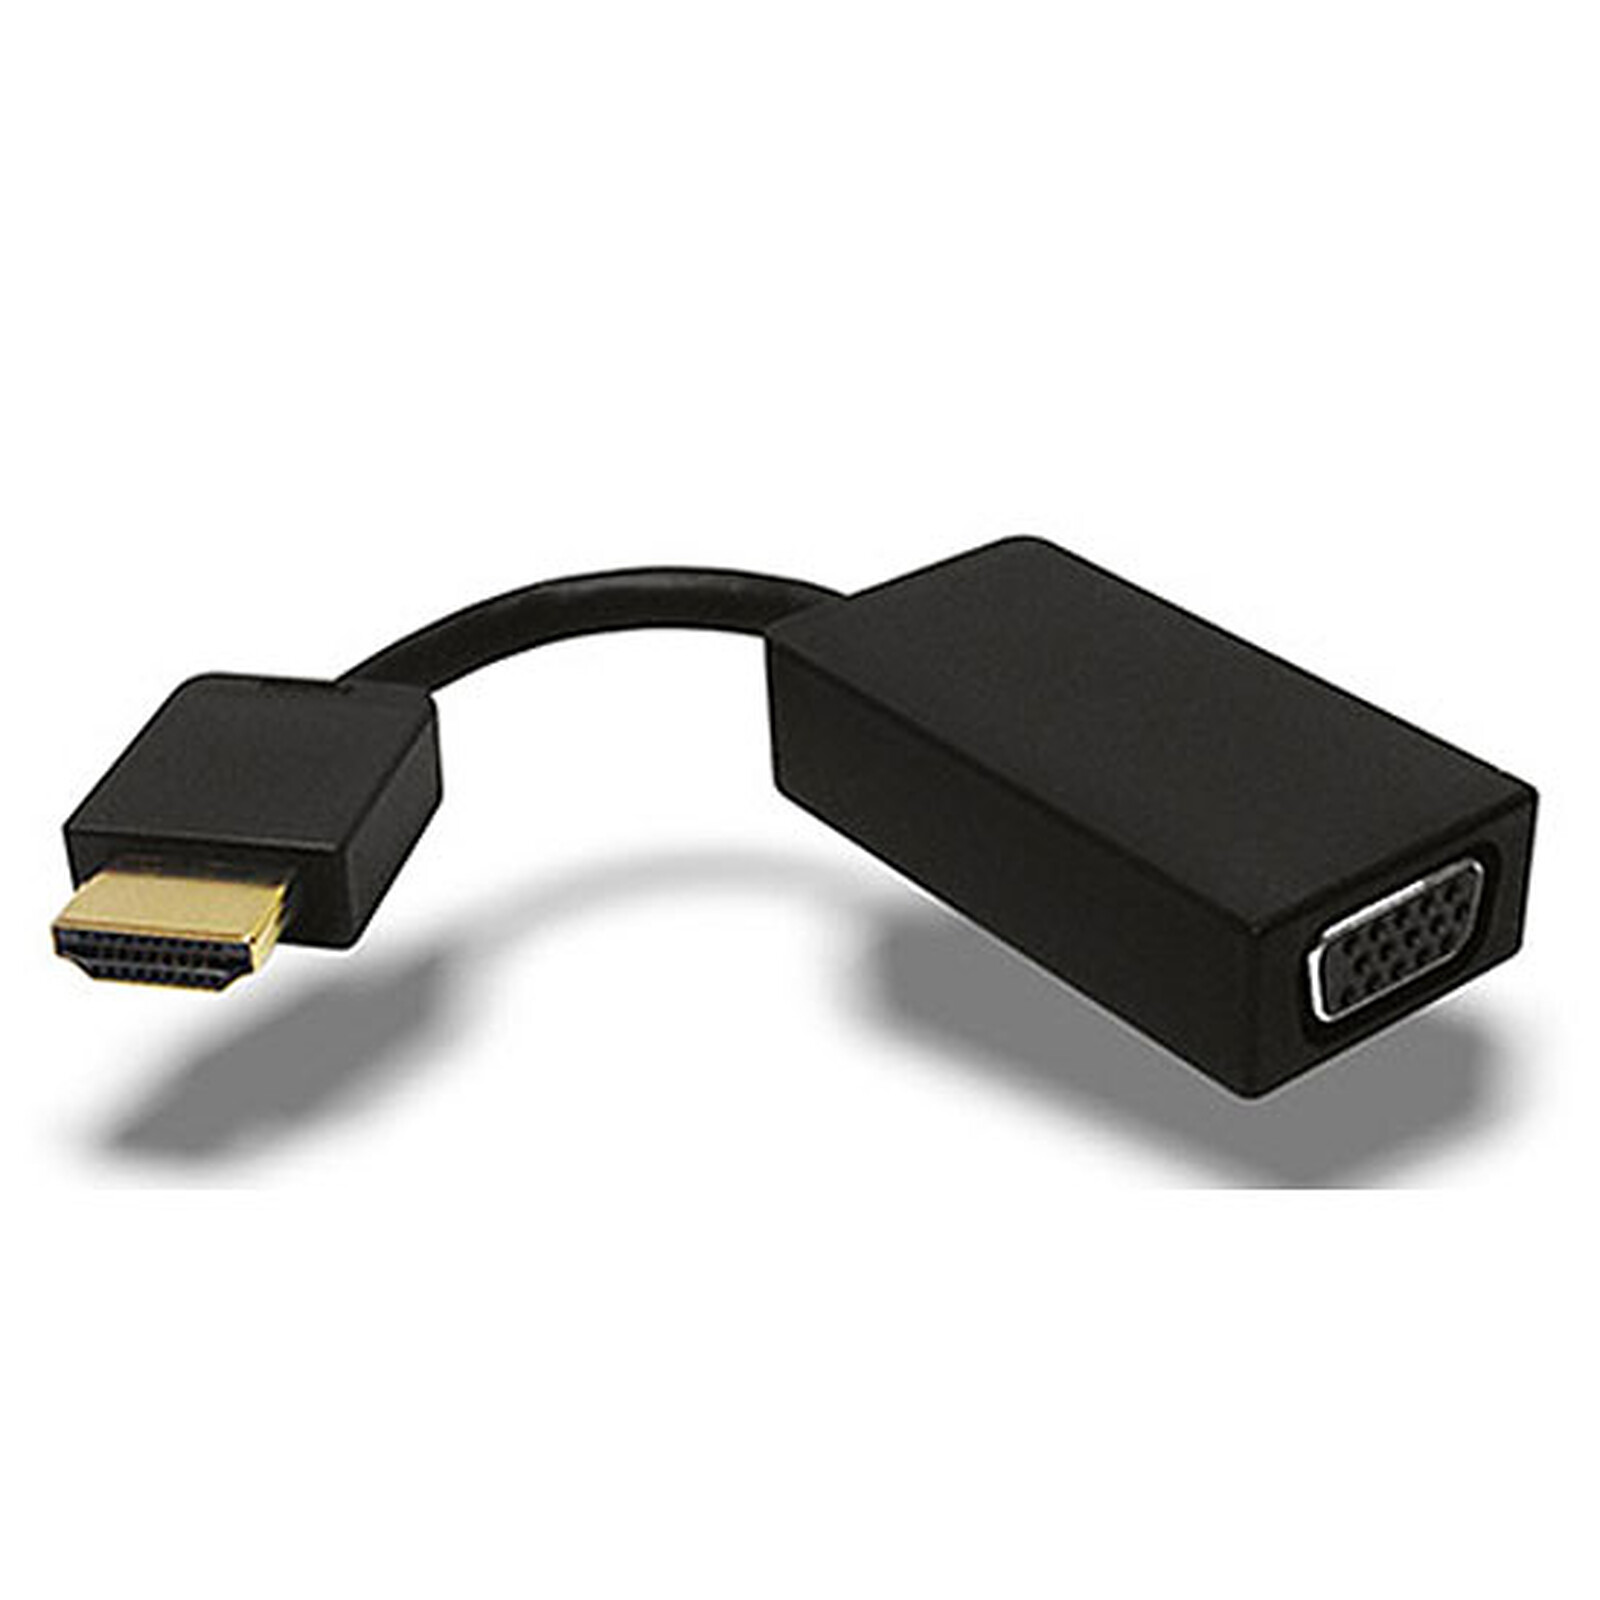 Belkin adaptateur universel HDMI / VGA avec prise jack - HDMI - Garantie 3  ans LDLC